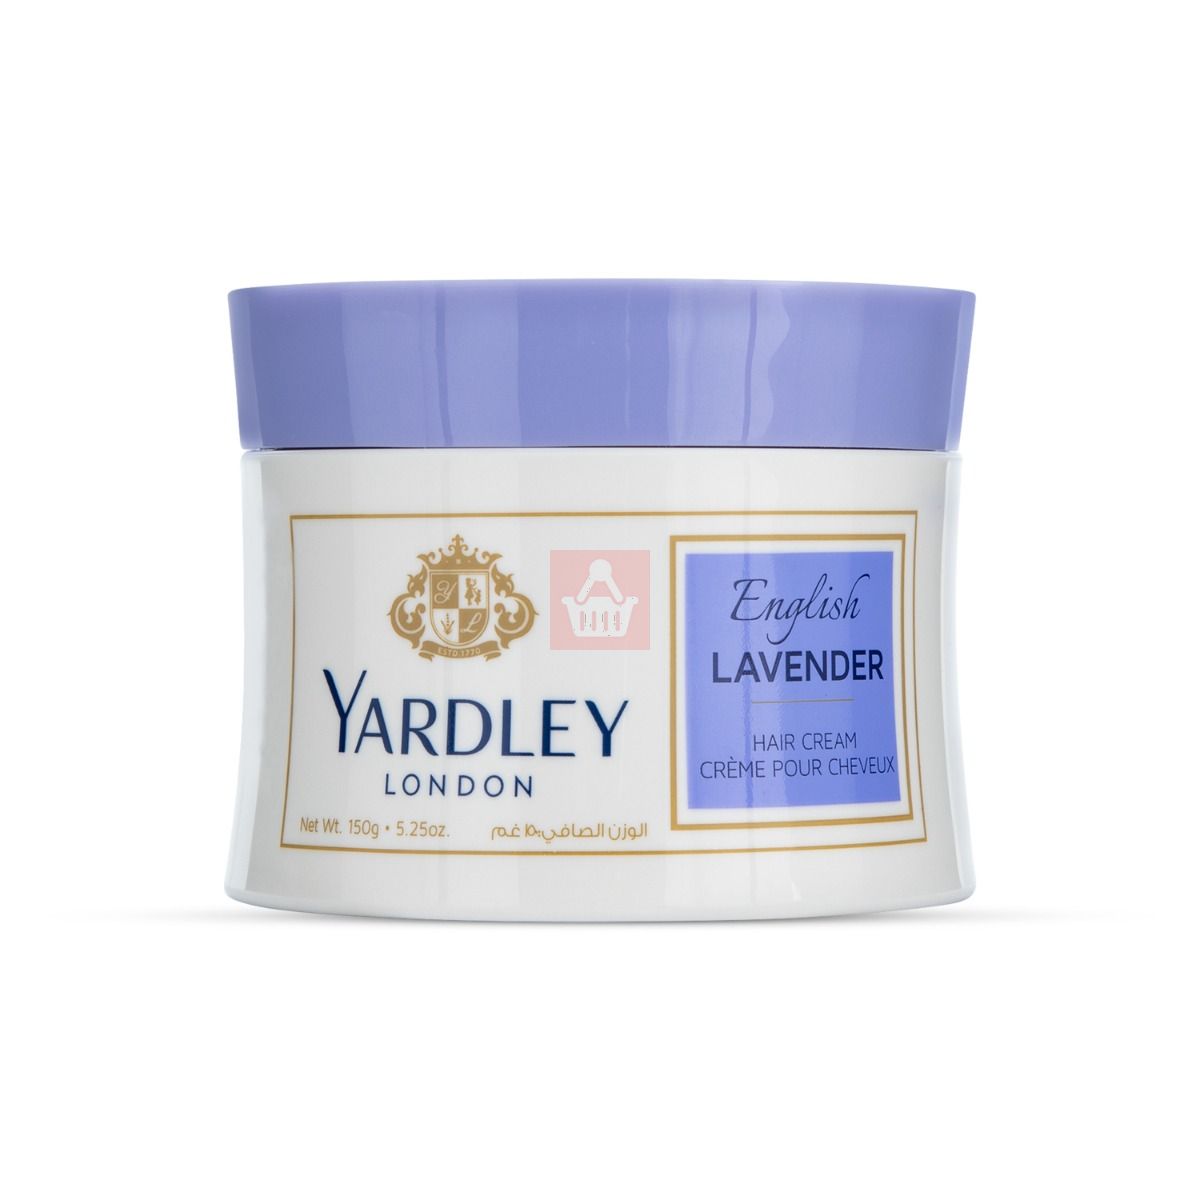 Yardley London English Lavender Hair Cream 150g